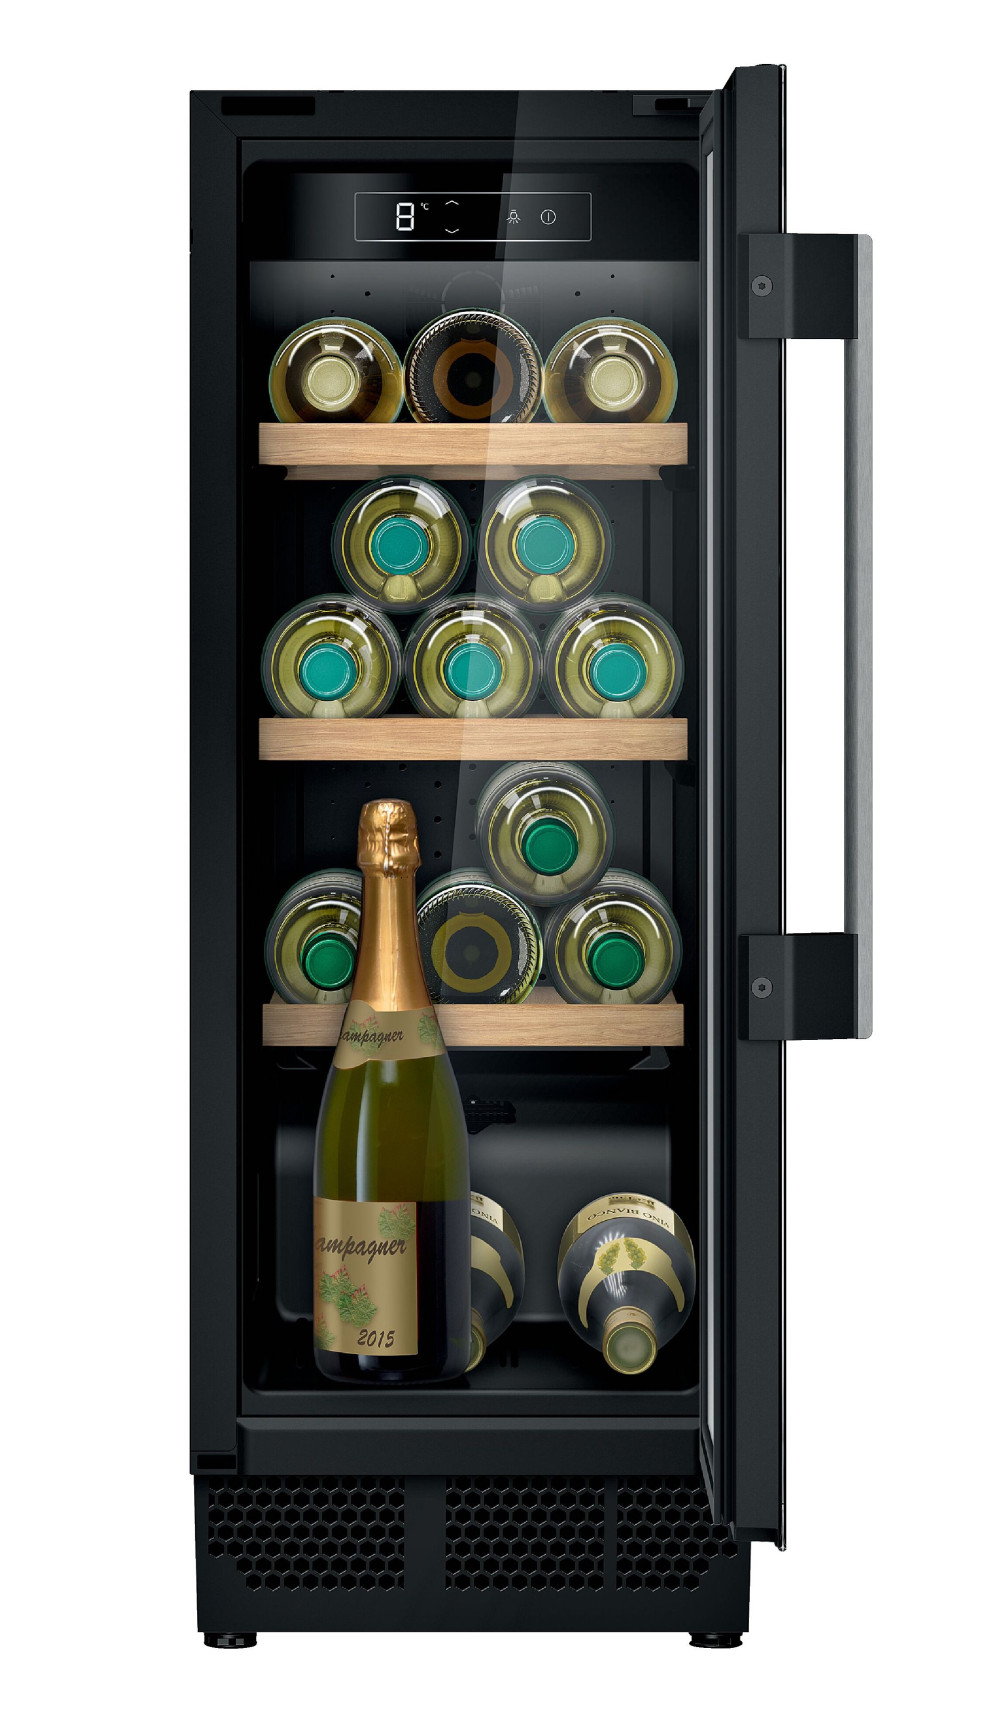 NEFF KU9202HF0G N 70 Wine Cooler with Glass Door featured image